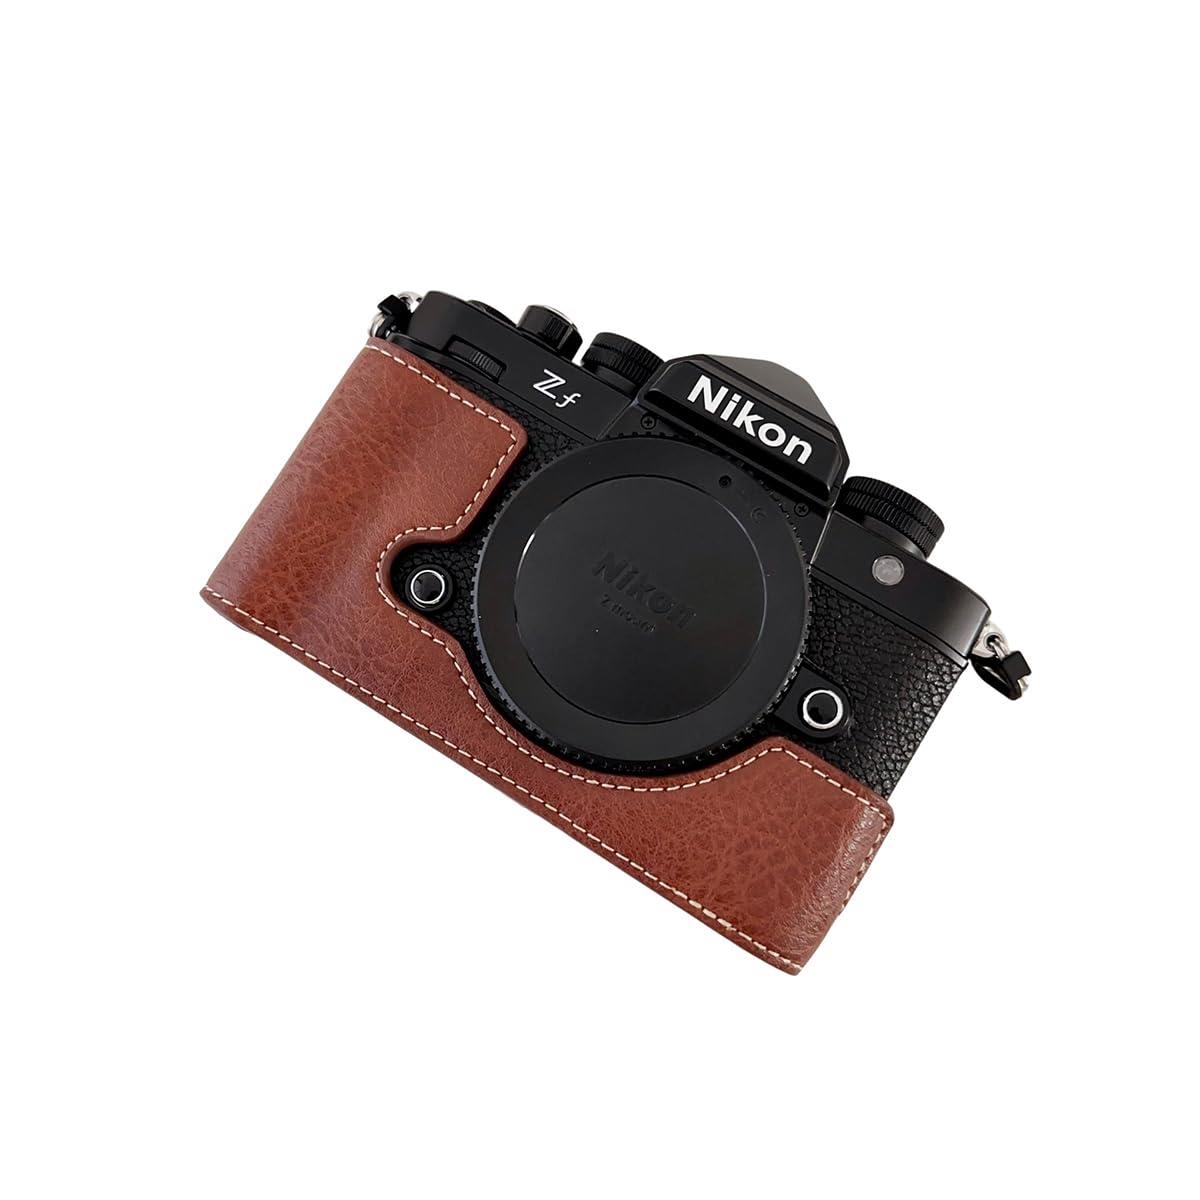 Koowl 対応 Nikon ニコン Zf Z f カメラ バッグ カメラ ケース Koowl手作りトップクラスのPUレザーカメラハーフケース 一眼カメラケース 防水 防振 携帯型 三脚設置でき コーヒー色 